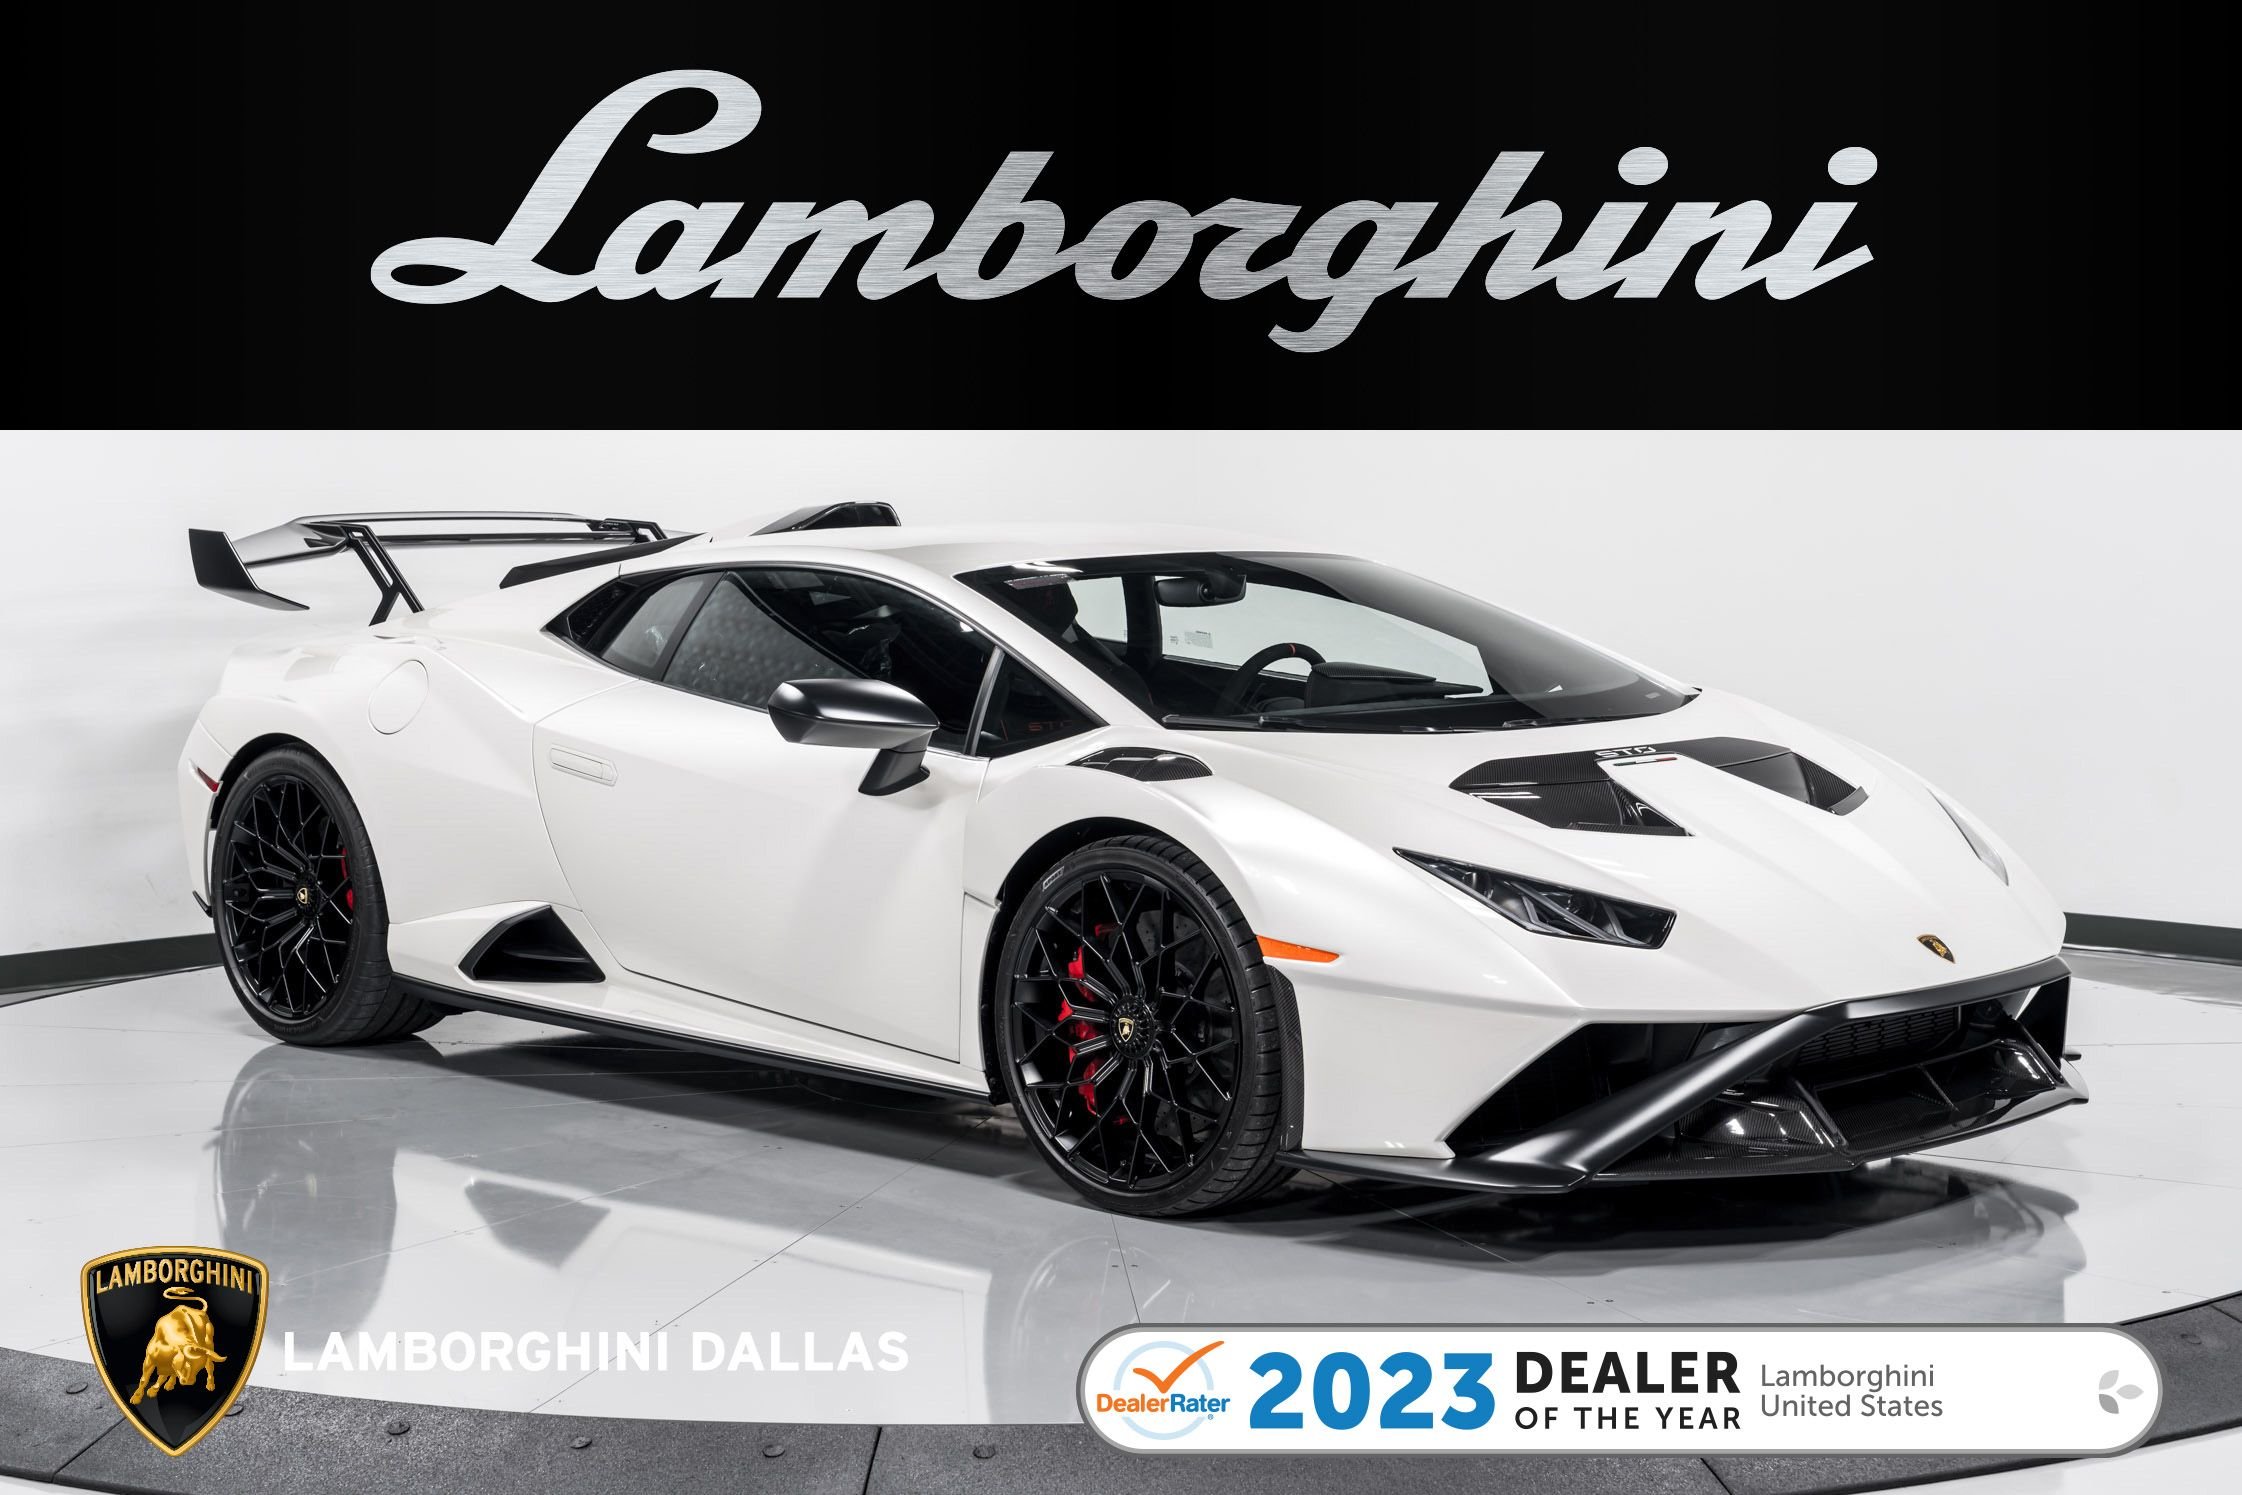 Used 2023 Lamborghini Huracan STO For Sale Richardson,TX | Stock 